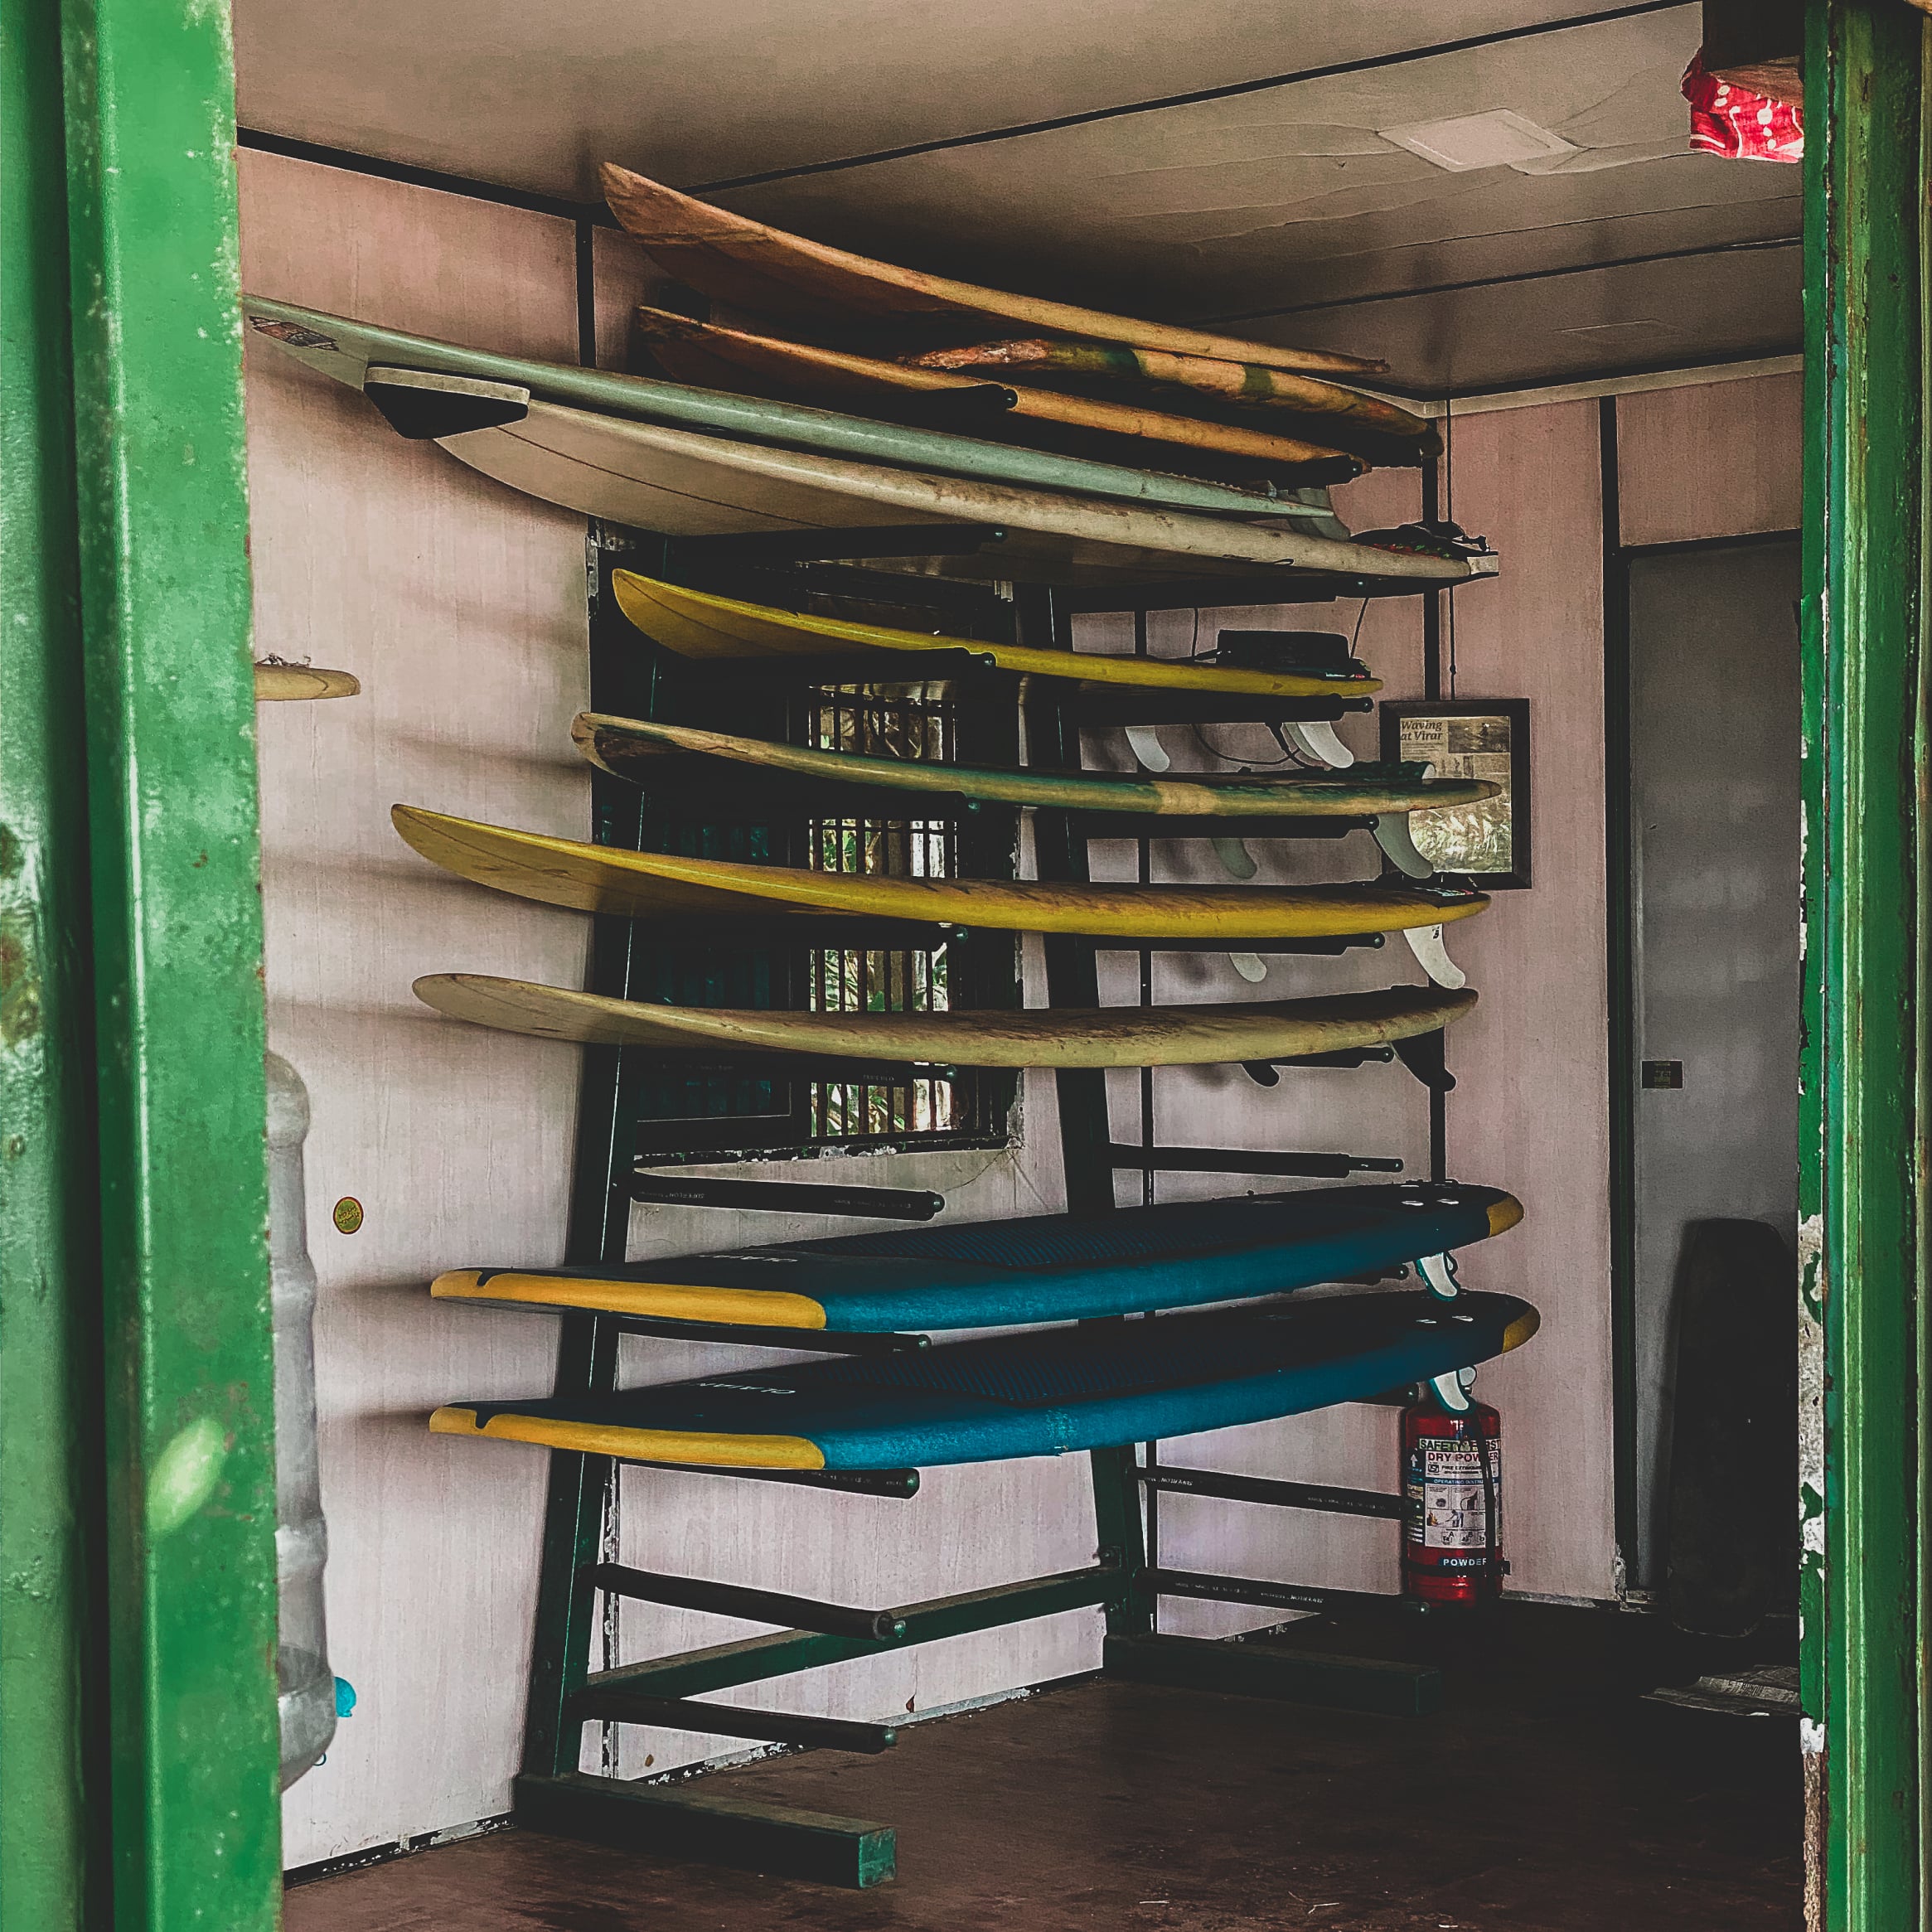 Surfing boards on surf racks